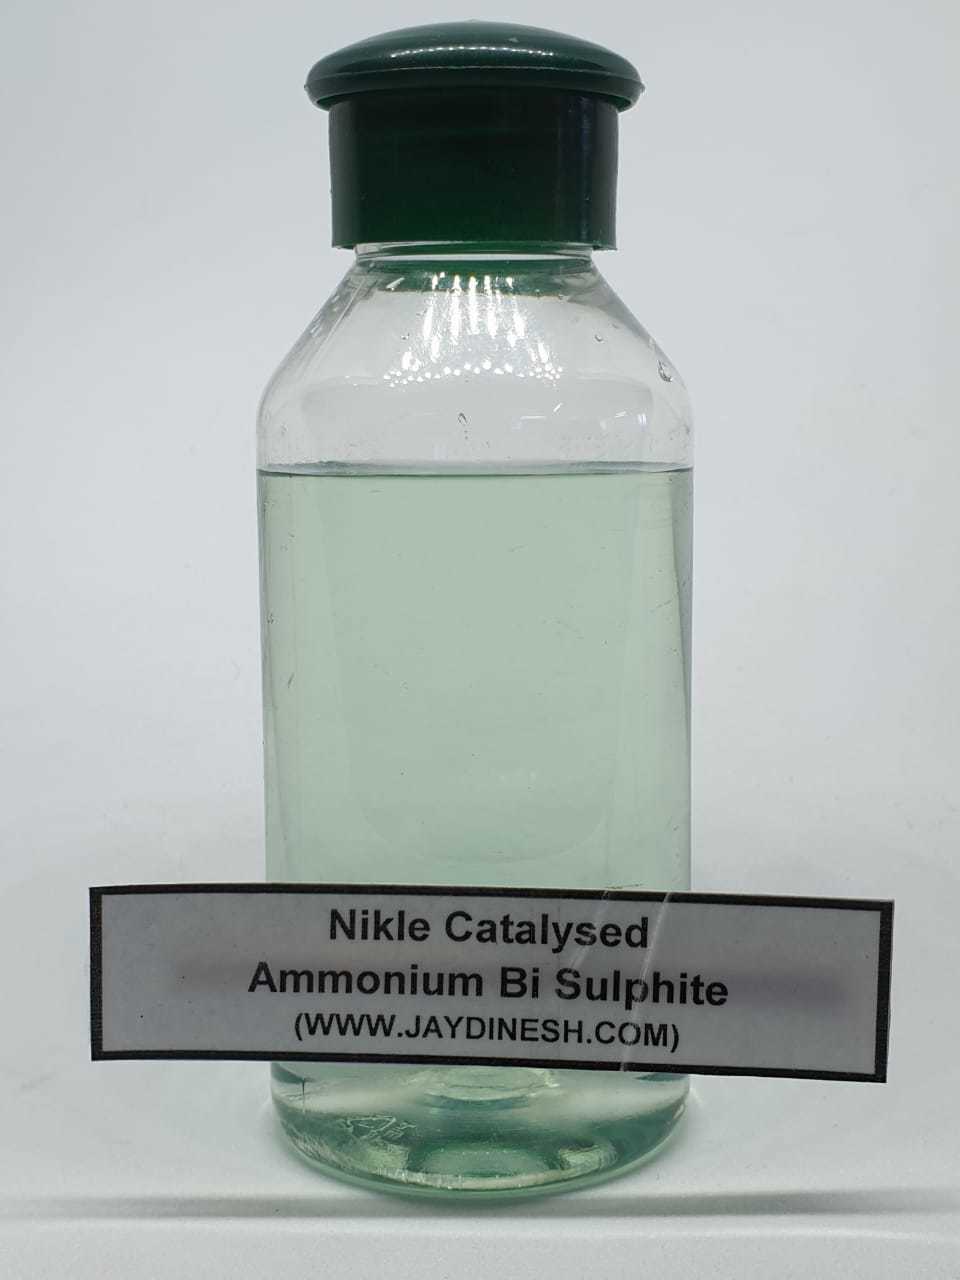 Nickel Catalyzed Ammonium Bi Sulphite